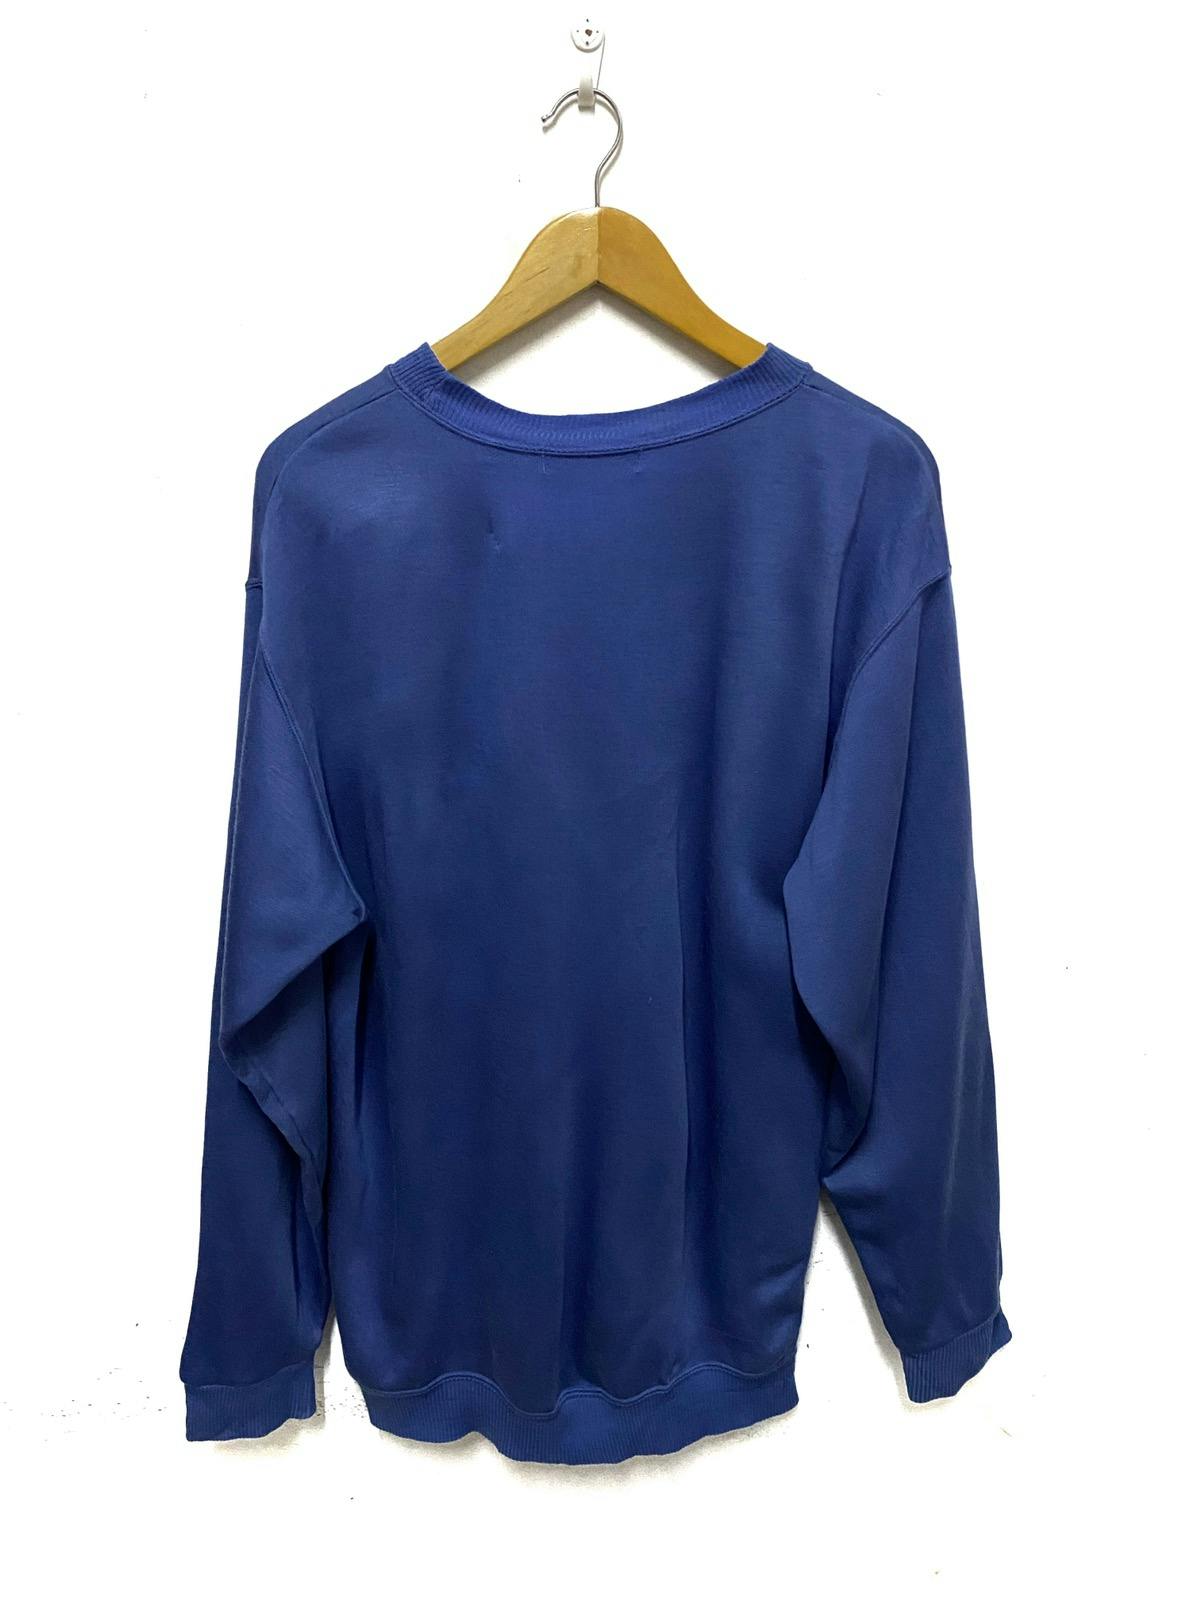 Vintage Pierre Balmain Sweatshirt - 4